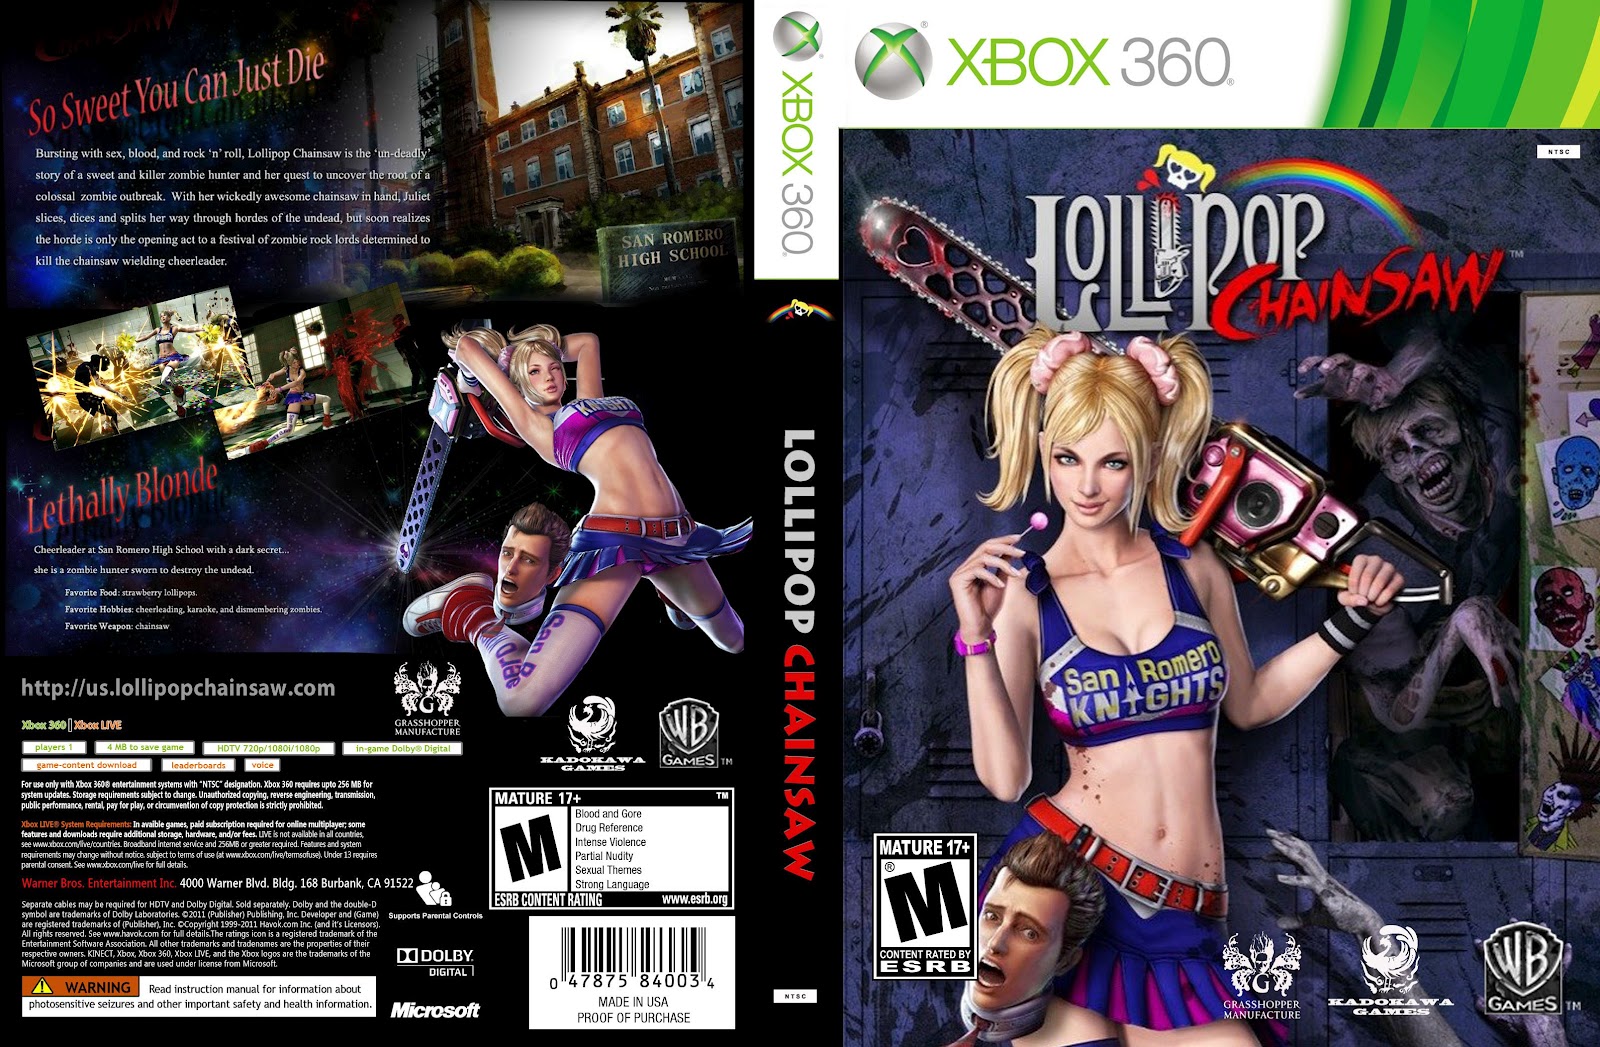 Lollipop ps3. Lollipop Chainsaw Xbox 360. Xbox 360 Lollipop Chainsaw (Premium Edition) обложки. Lollipop Chainsaw на ПК. Lollipop Chainsaw ps3.